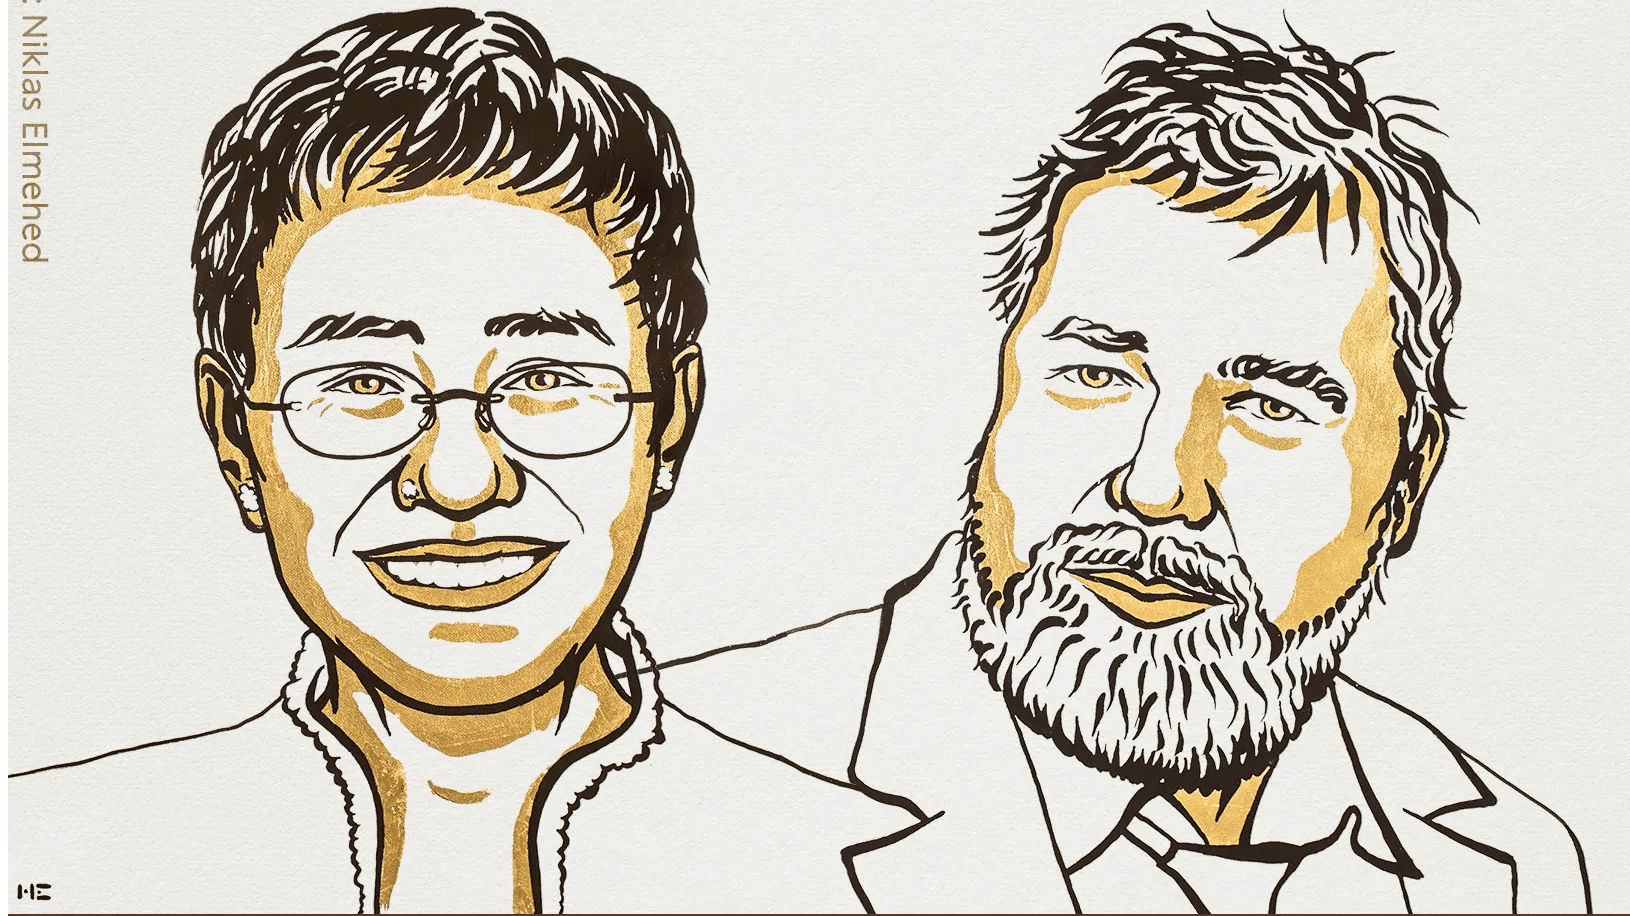 Journalists Maria Ressa and Dmitry Muratov win Nobel Peace Prize 2021